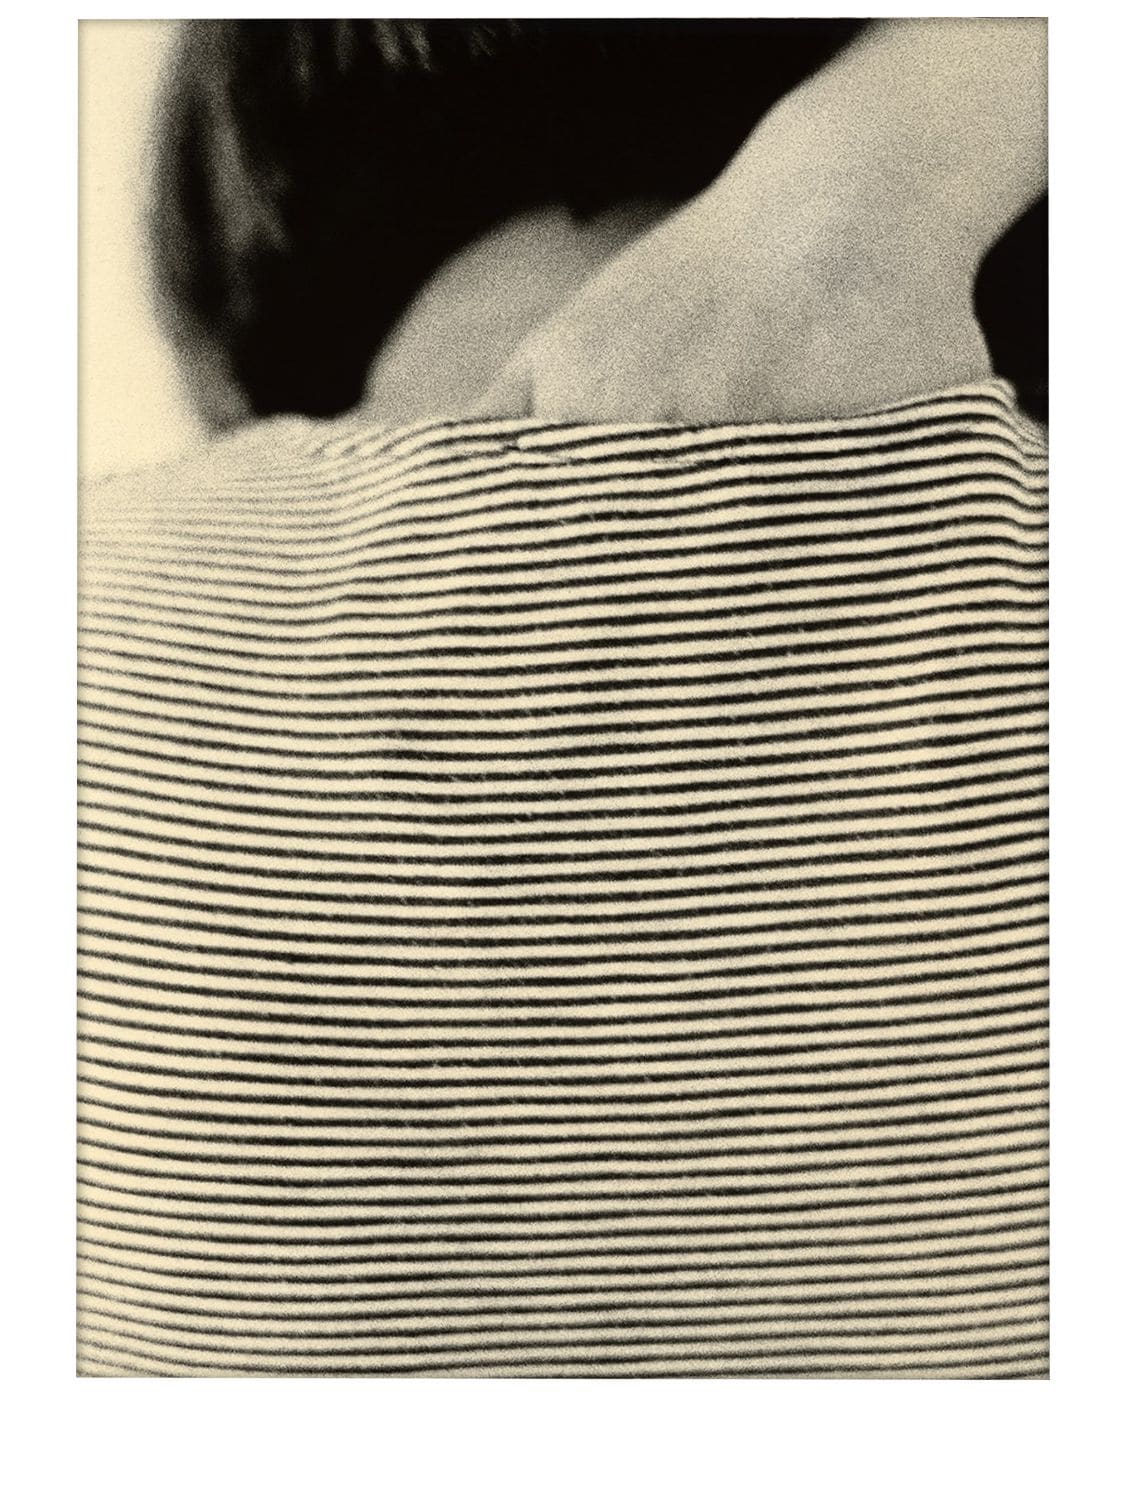 Image of Striped Shirt